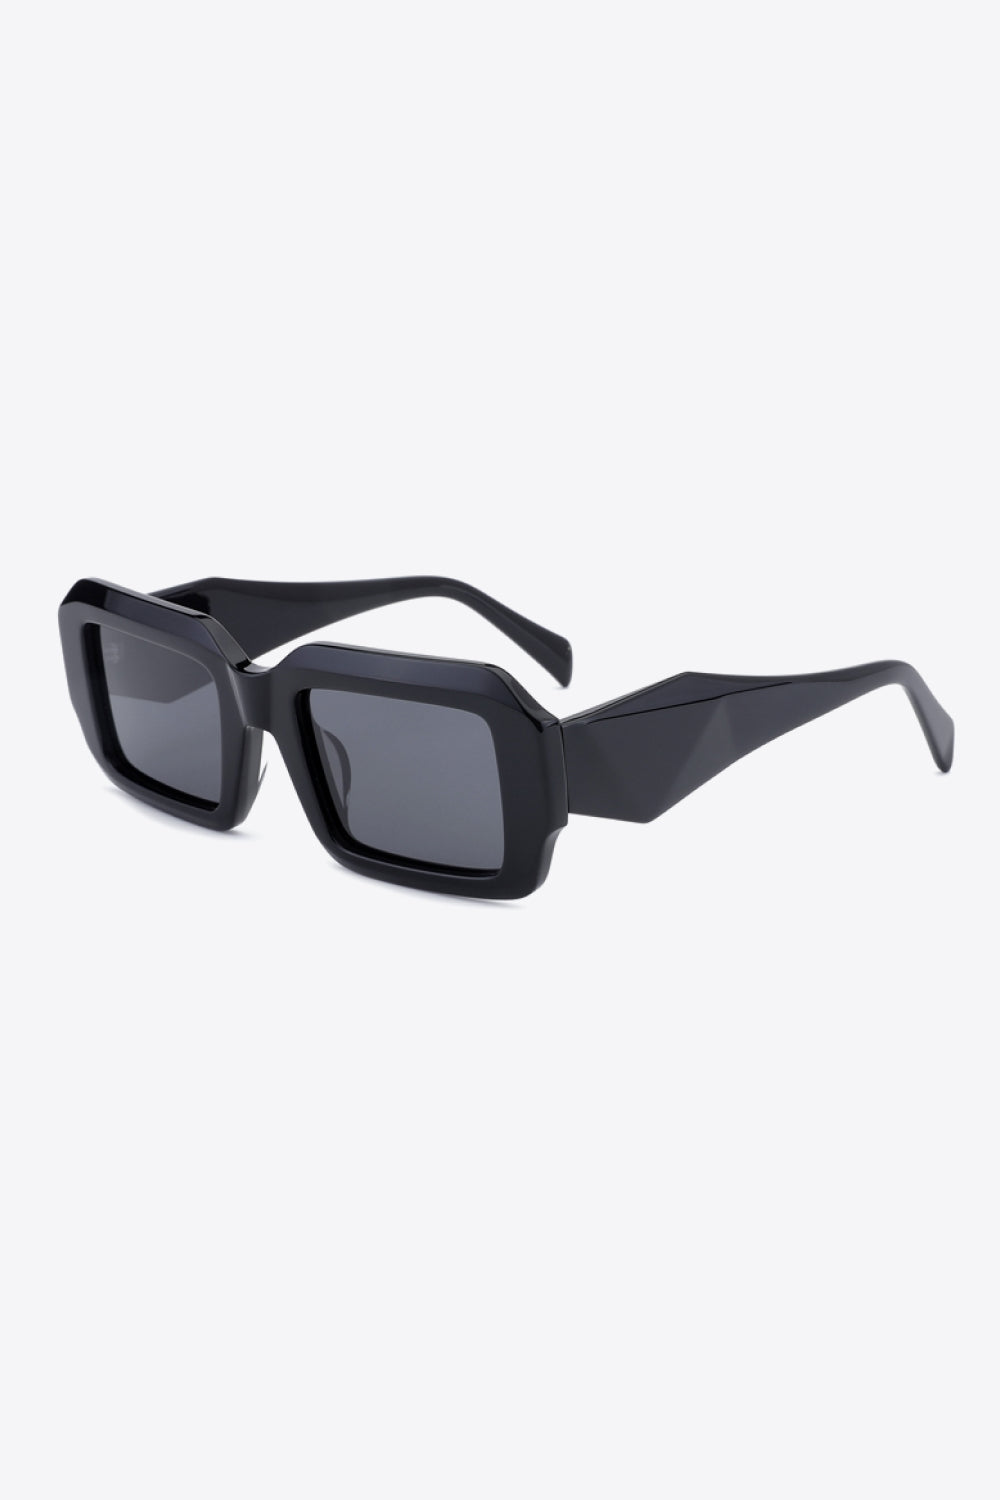 Rectangle TAC Polarization Lens Full Rim Sunglasses - Black / One Size Girl Code